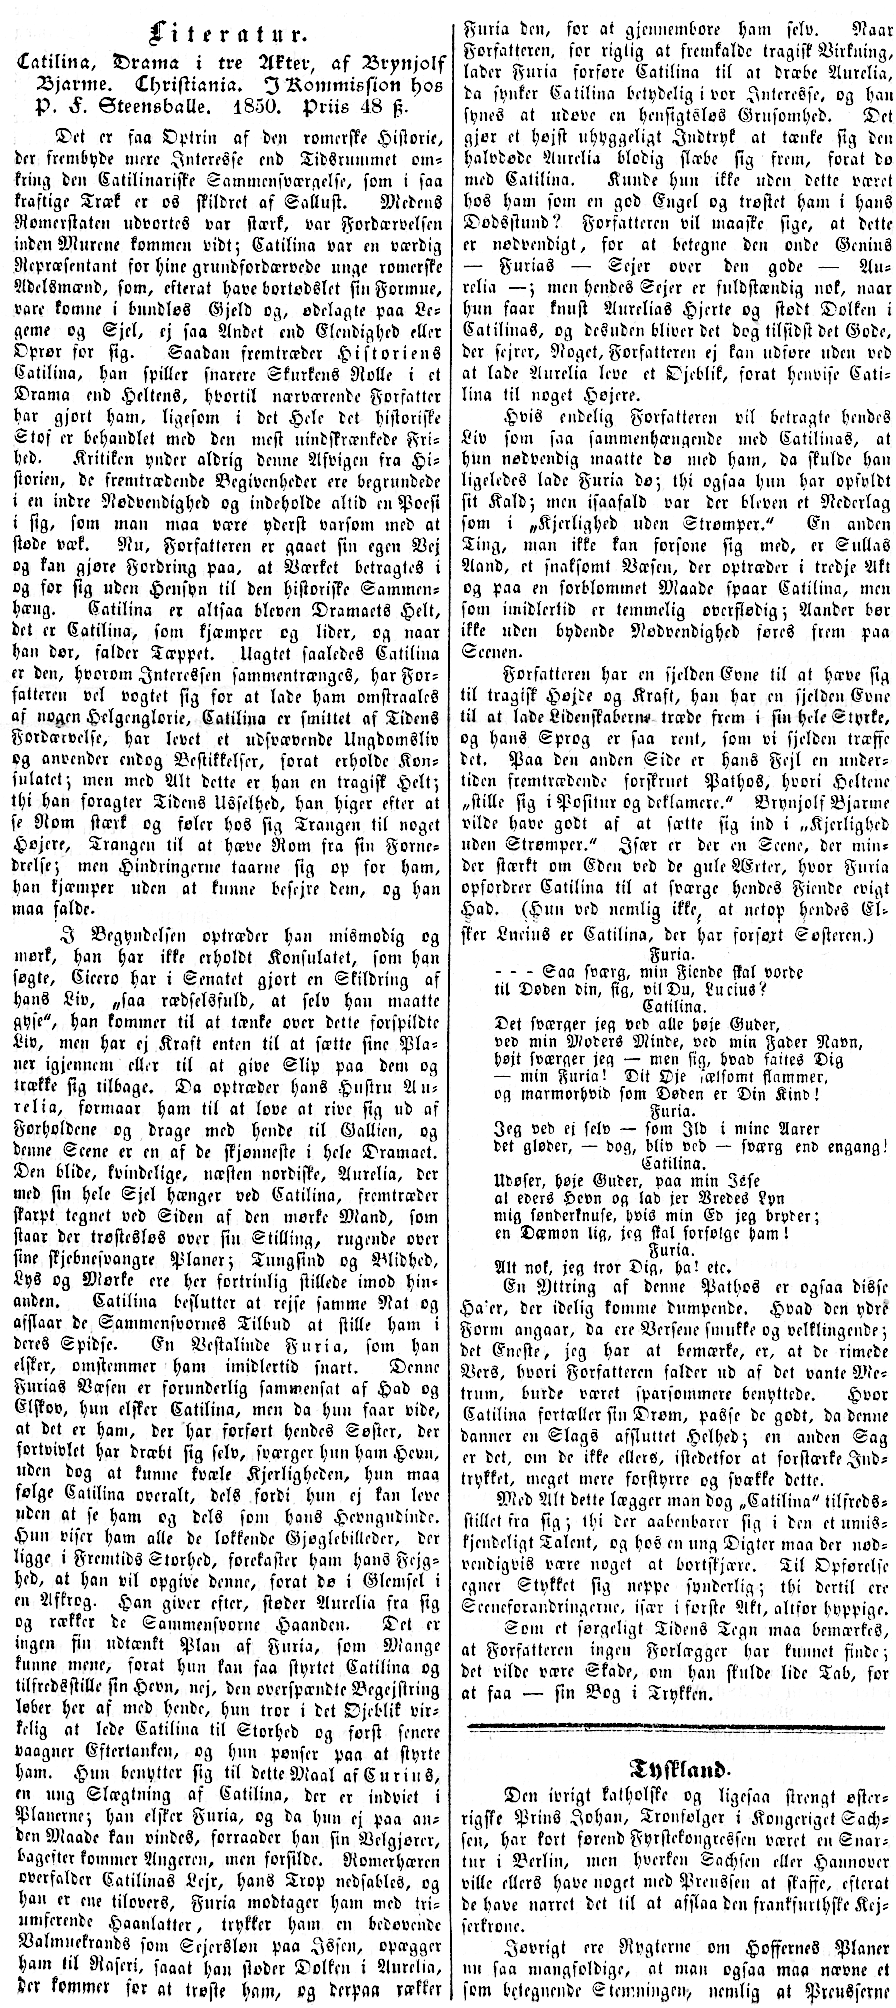 Henrik Ibsen: Catilina. Anmeldelse i Christiania-Posten, 16. mai 1850